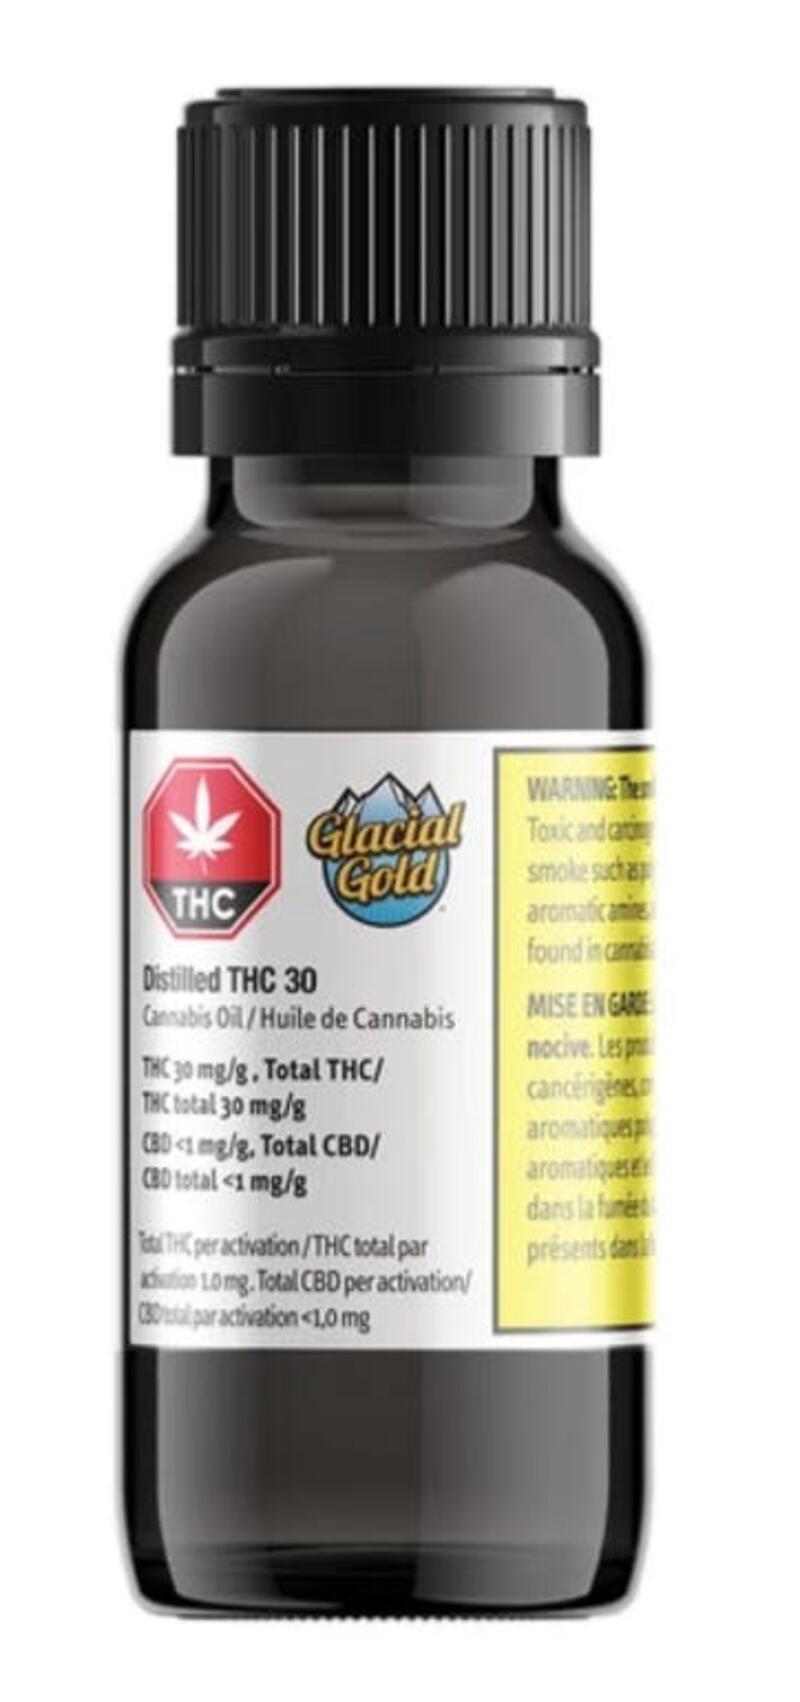 Distilled THC 30 Oil